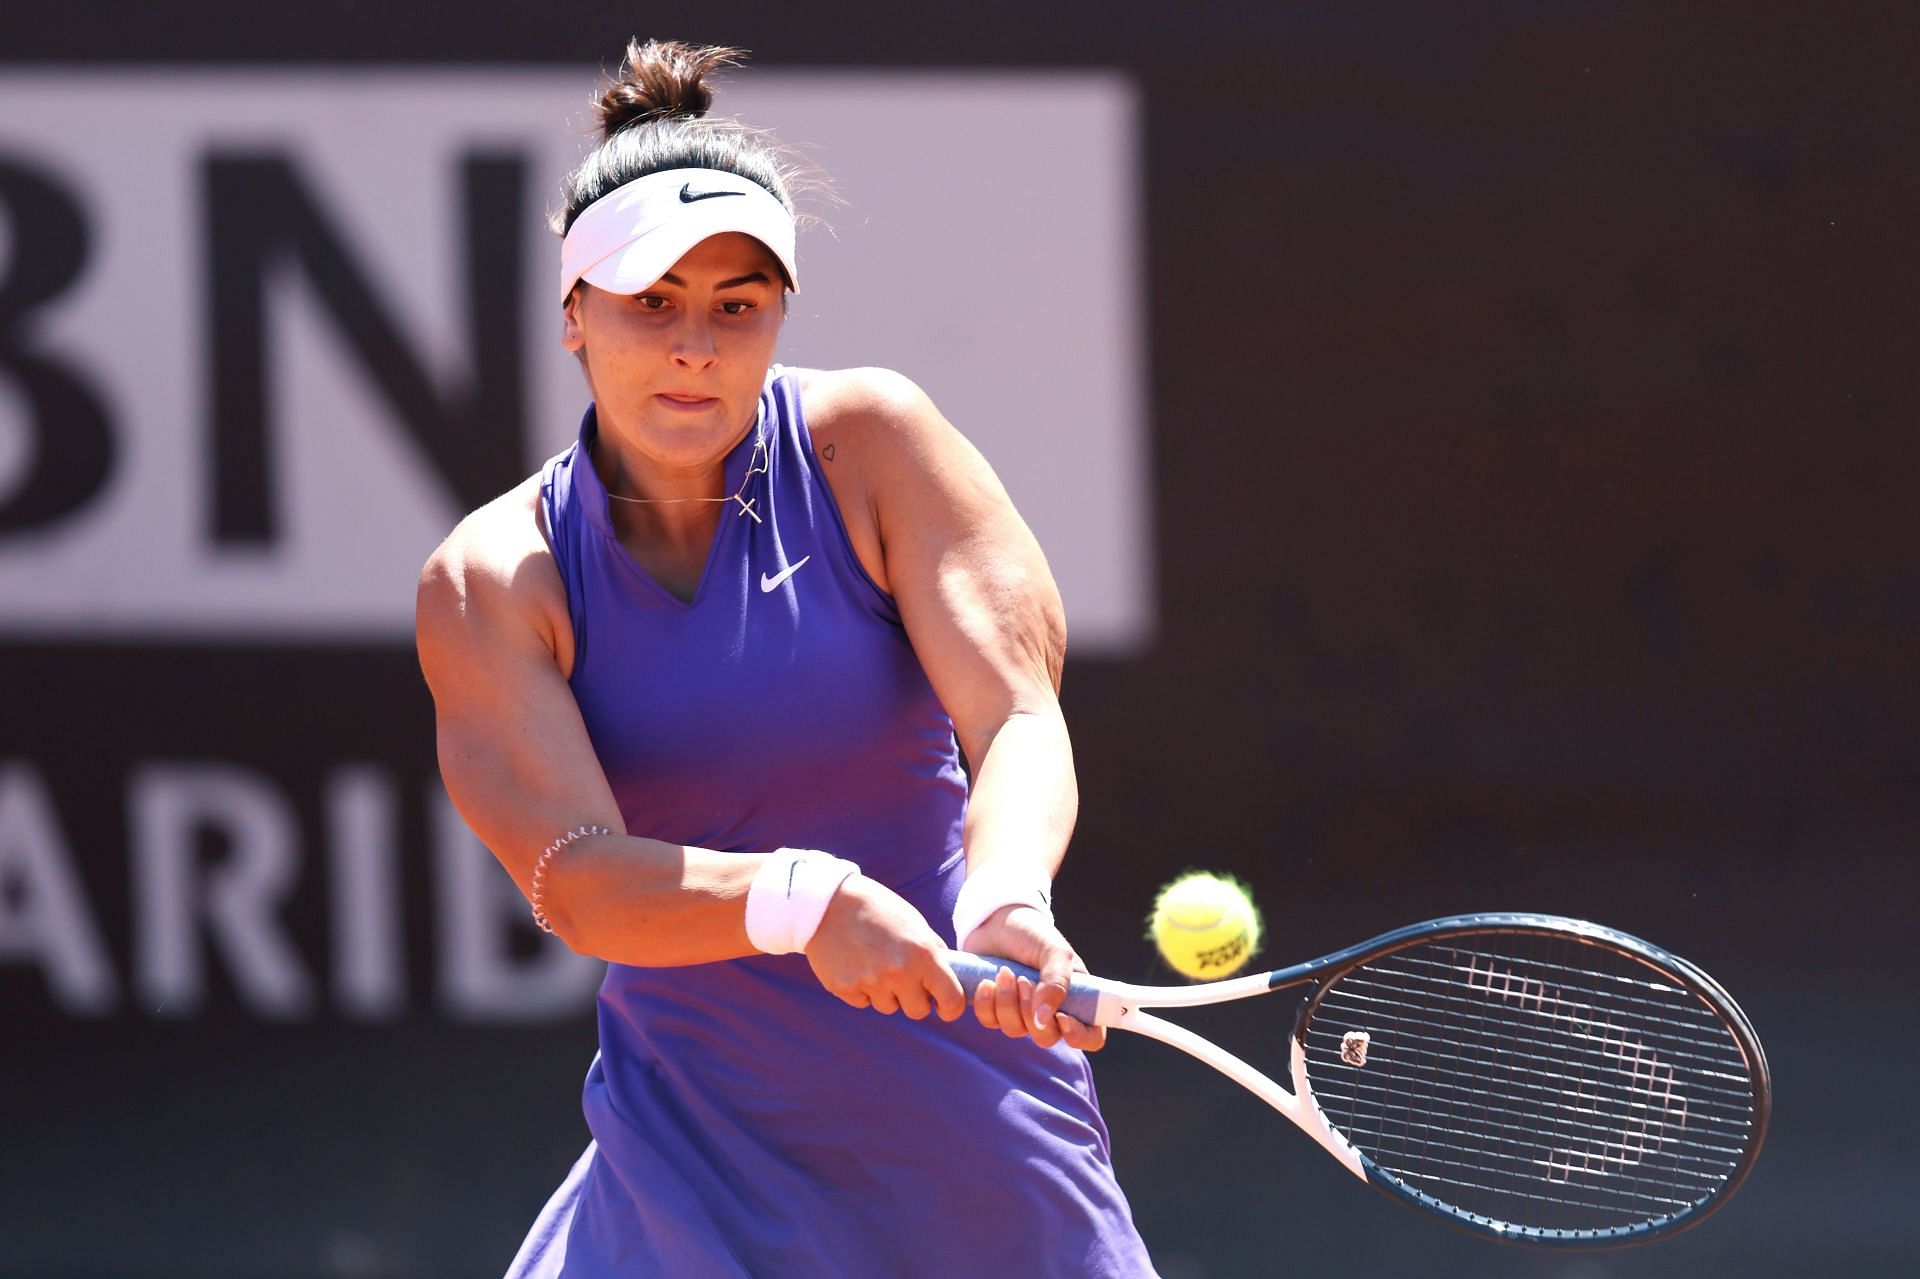 Bianca Andreescu faces Iga Swiatek in the quarterfinals of the Italian Open